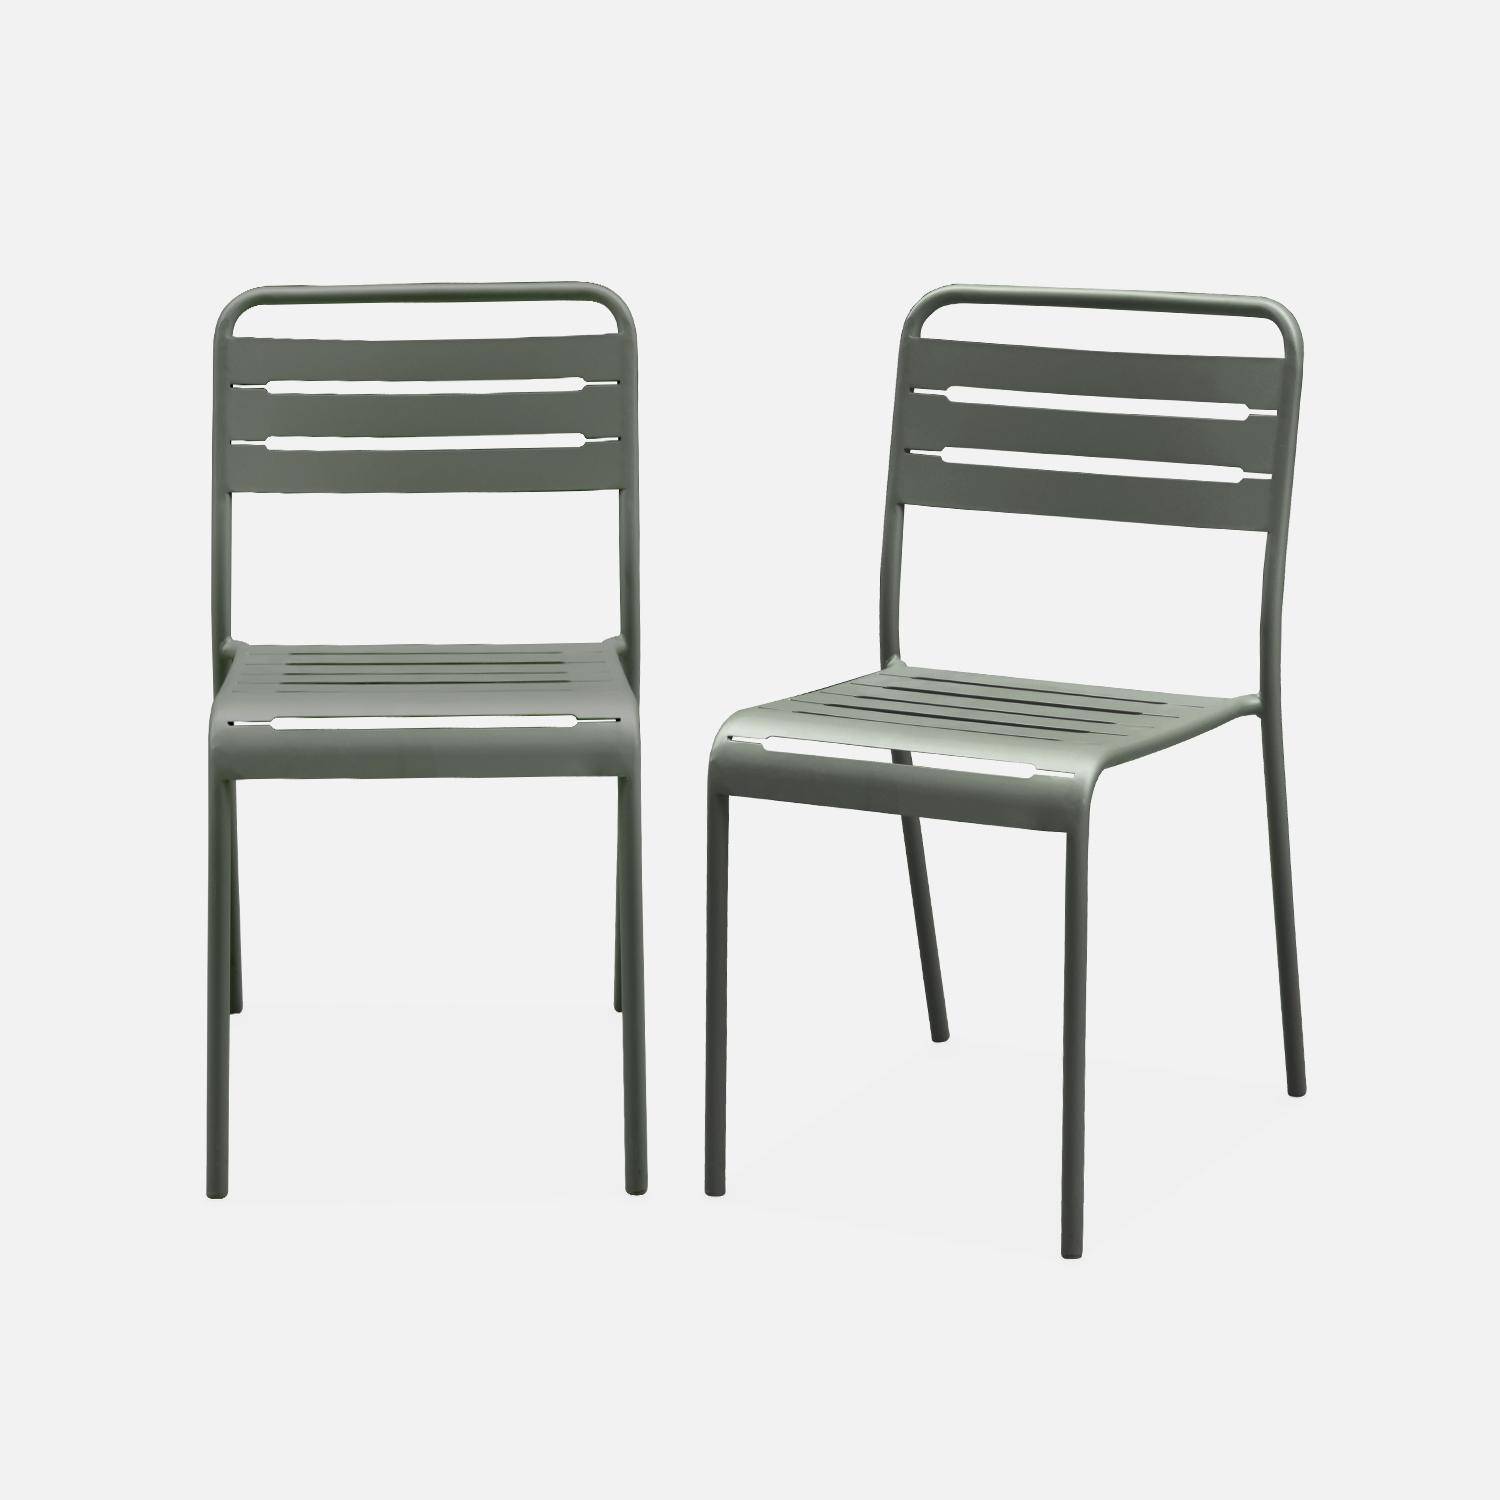 Pair of bistro steel garden chairs, stackable, W44xD52xH79cm, Khaki Green Photo4